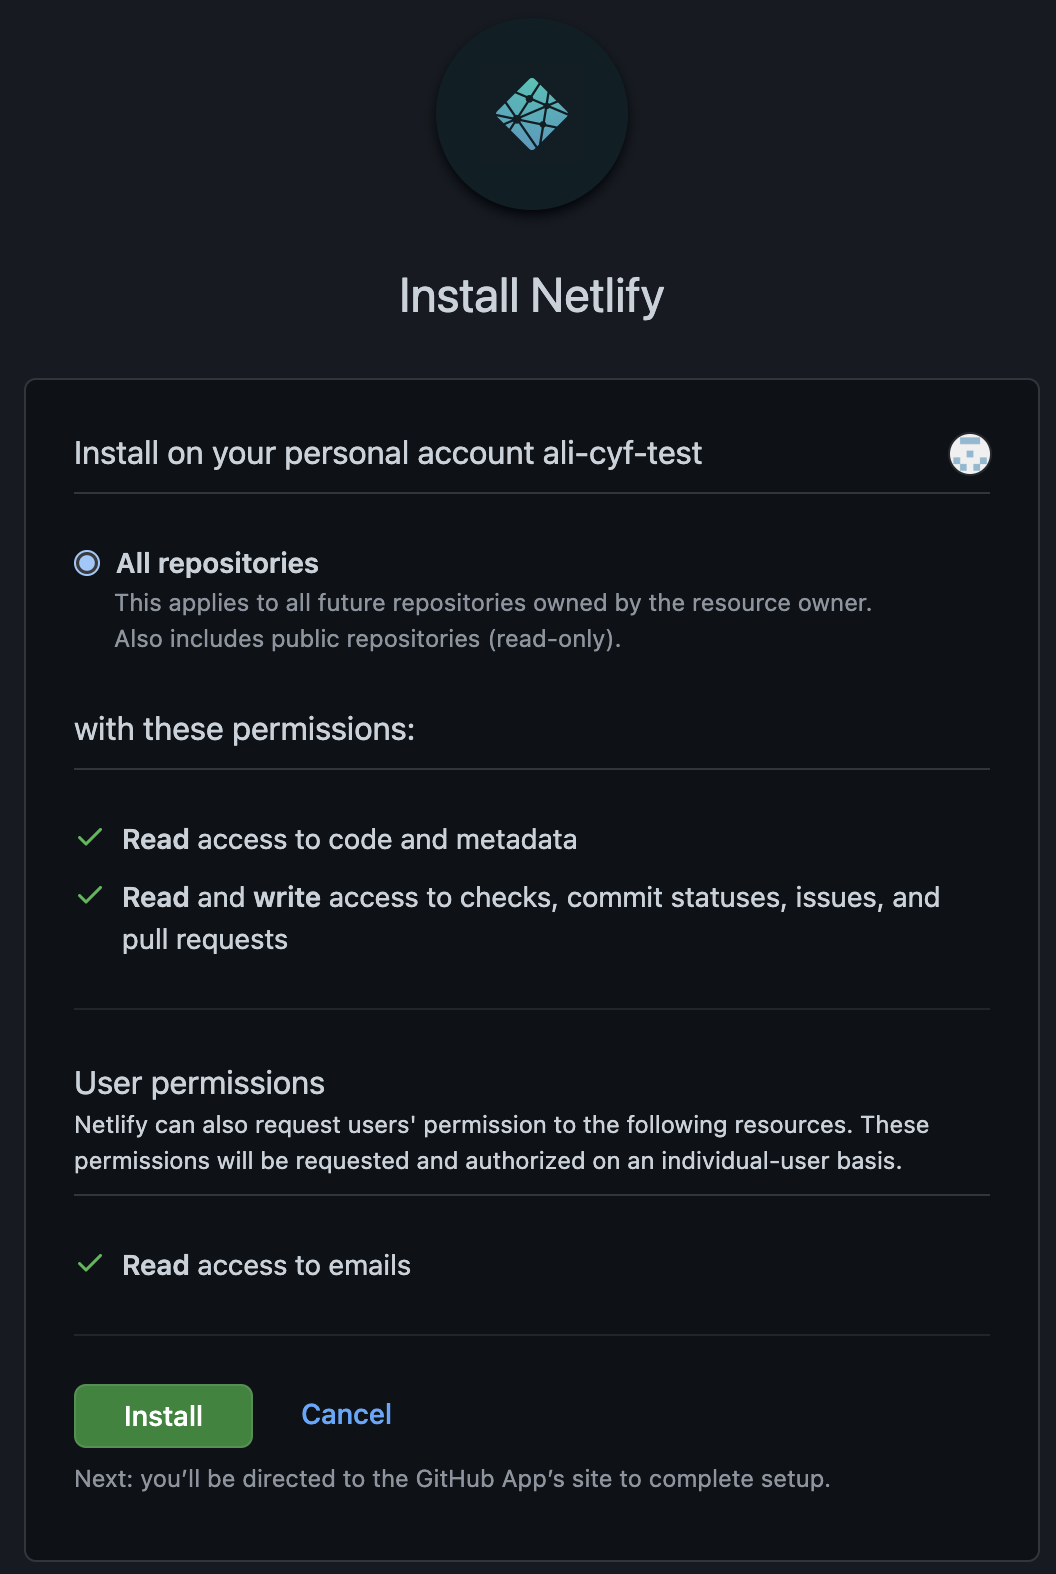 Installing Netlify into your GitHub account